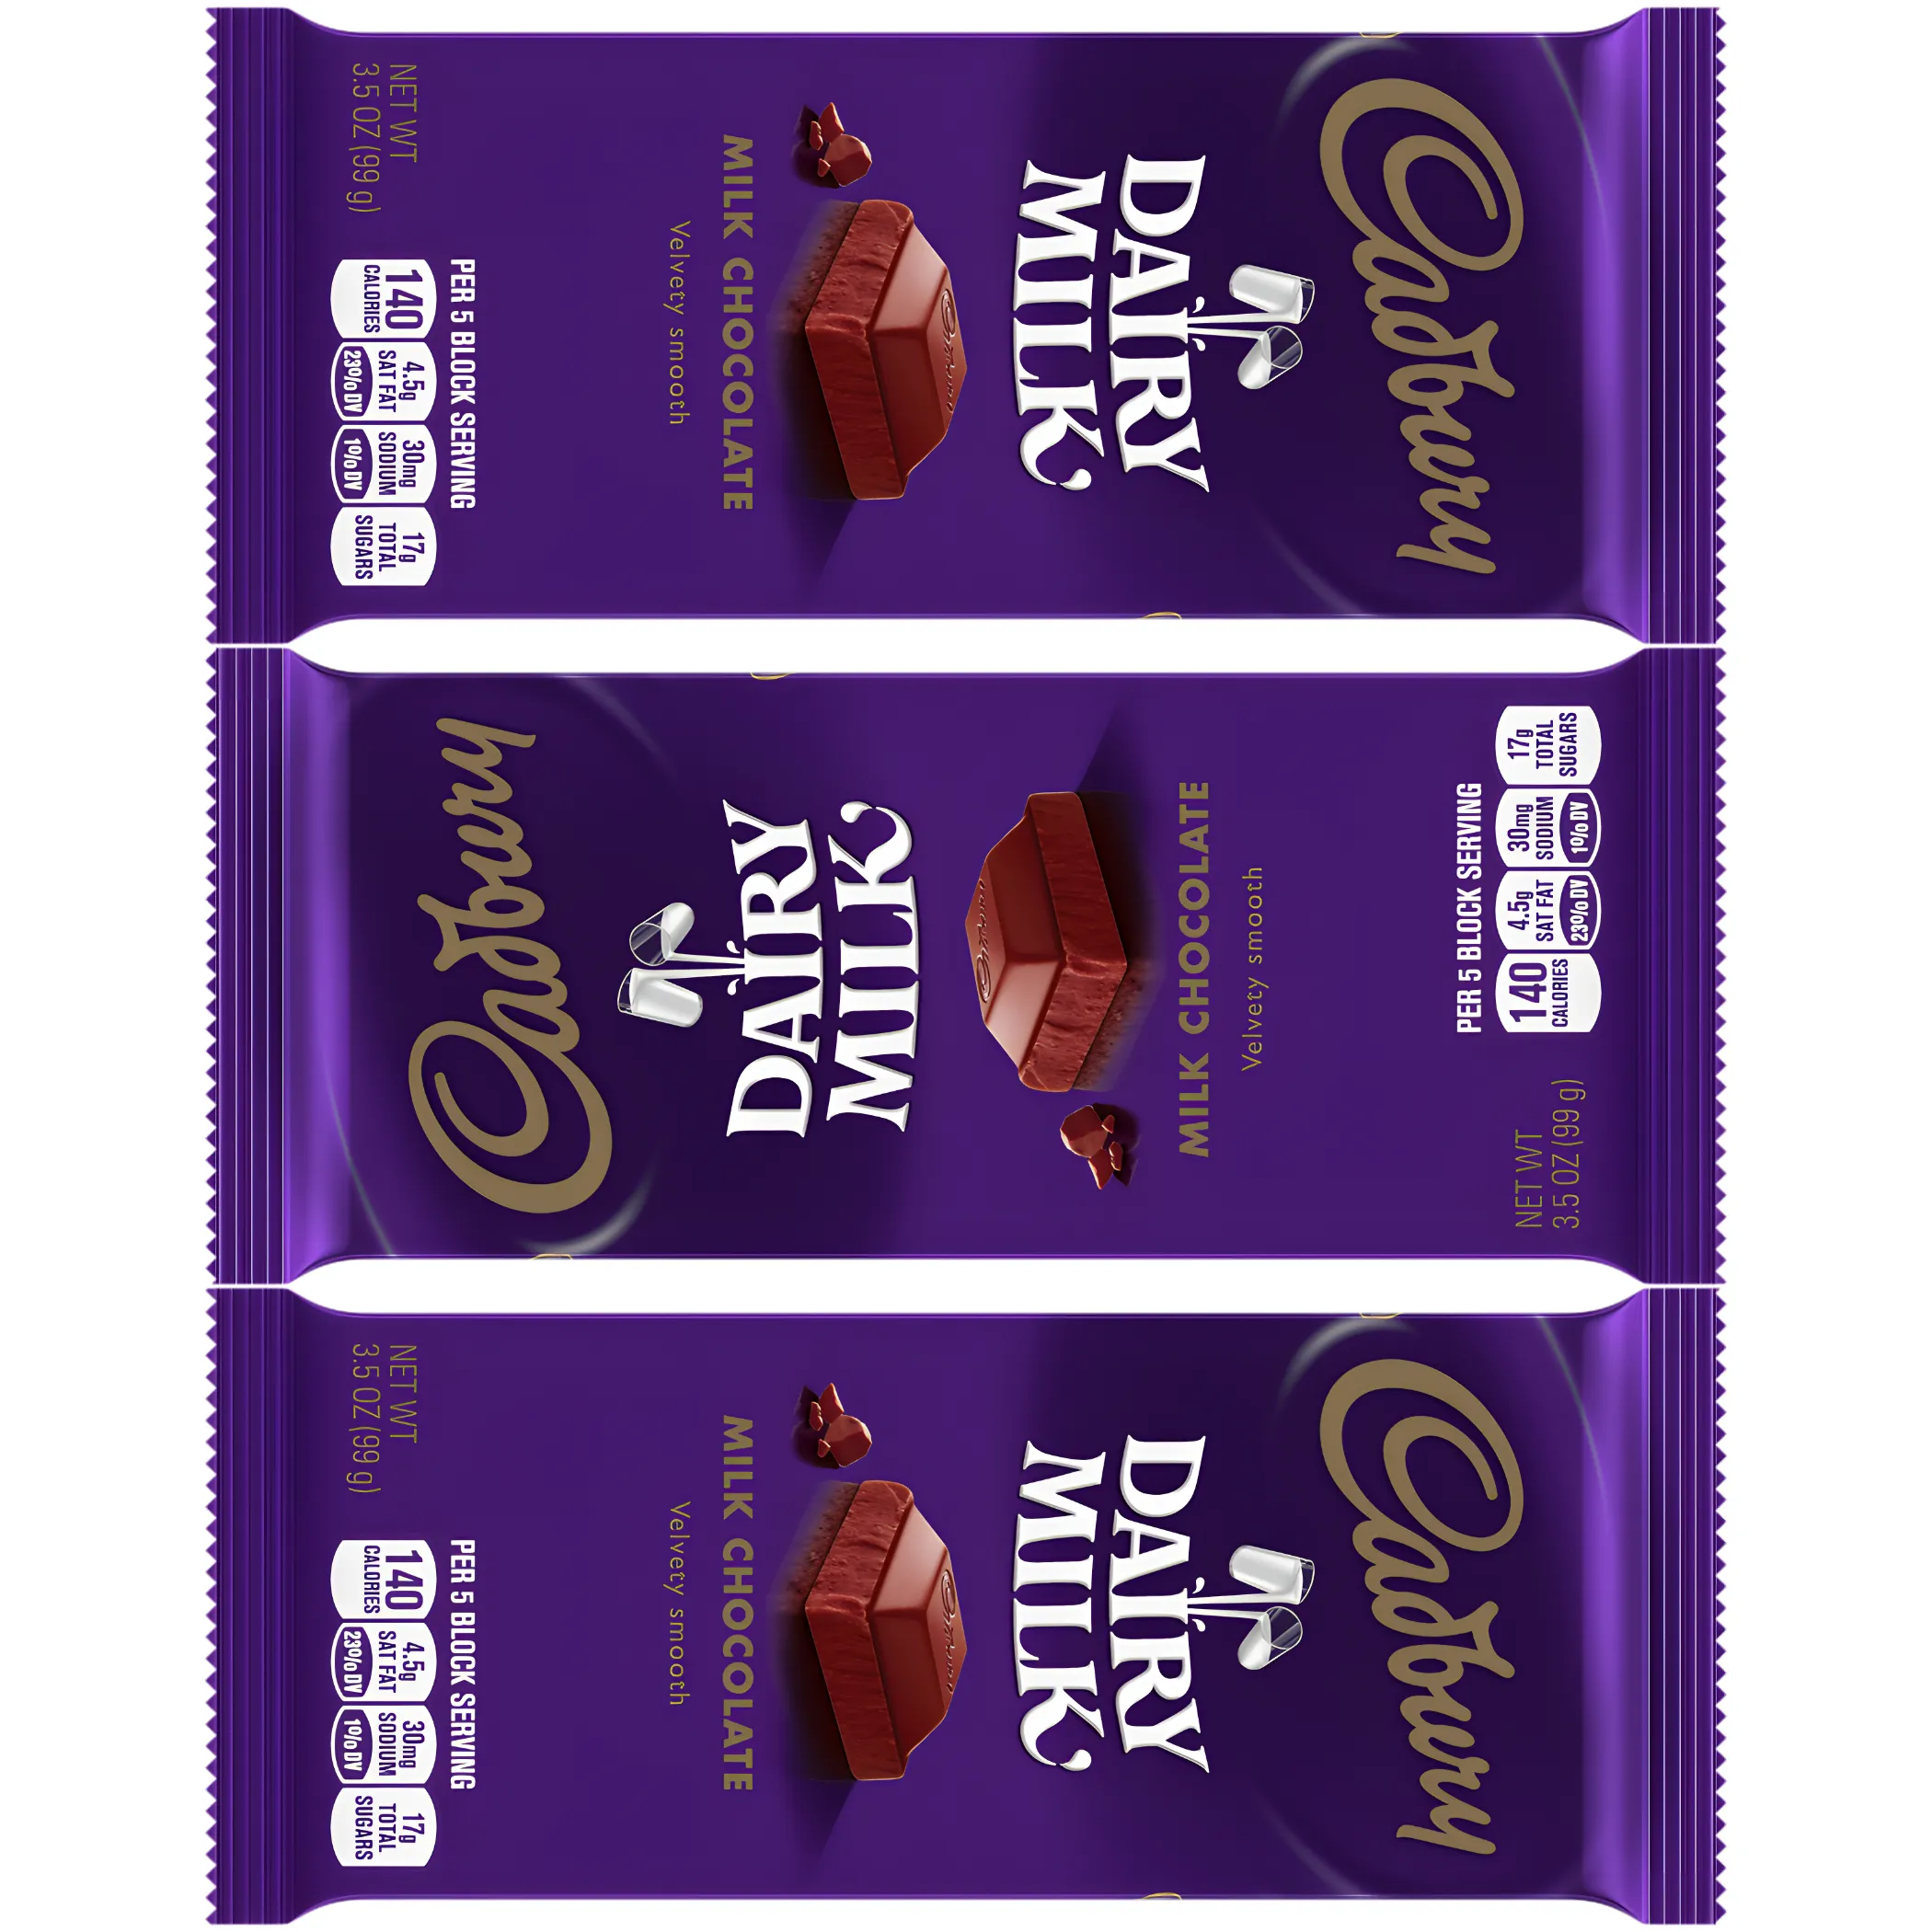 Free Cadbury Dairy Milk Chocolate Bar